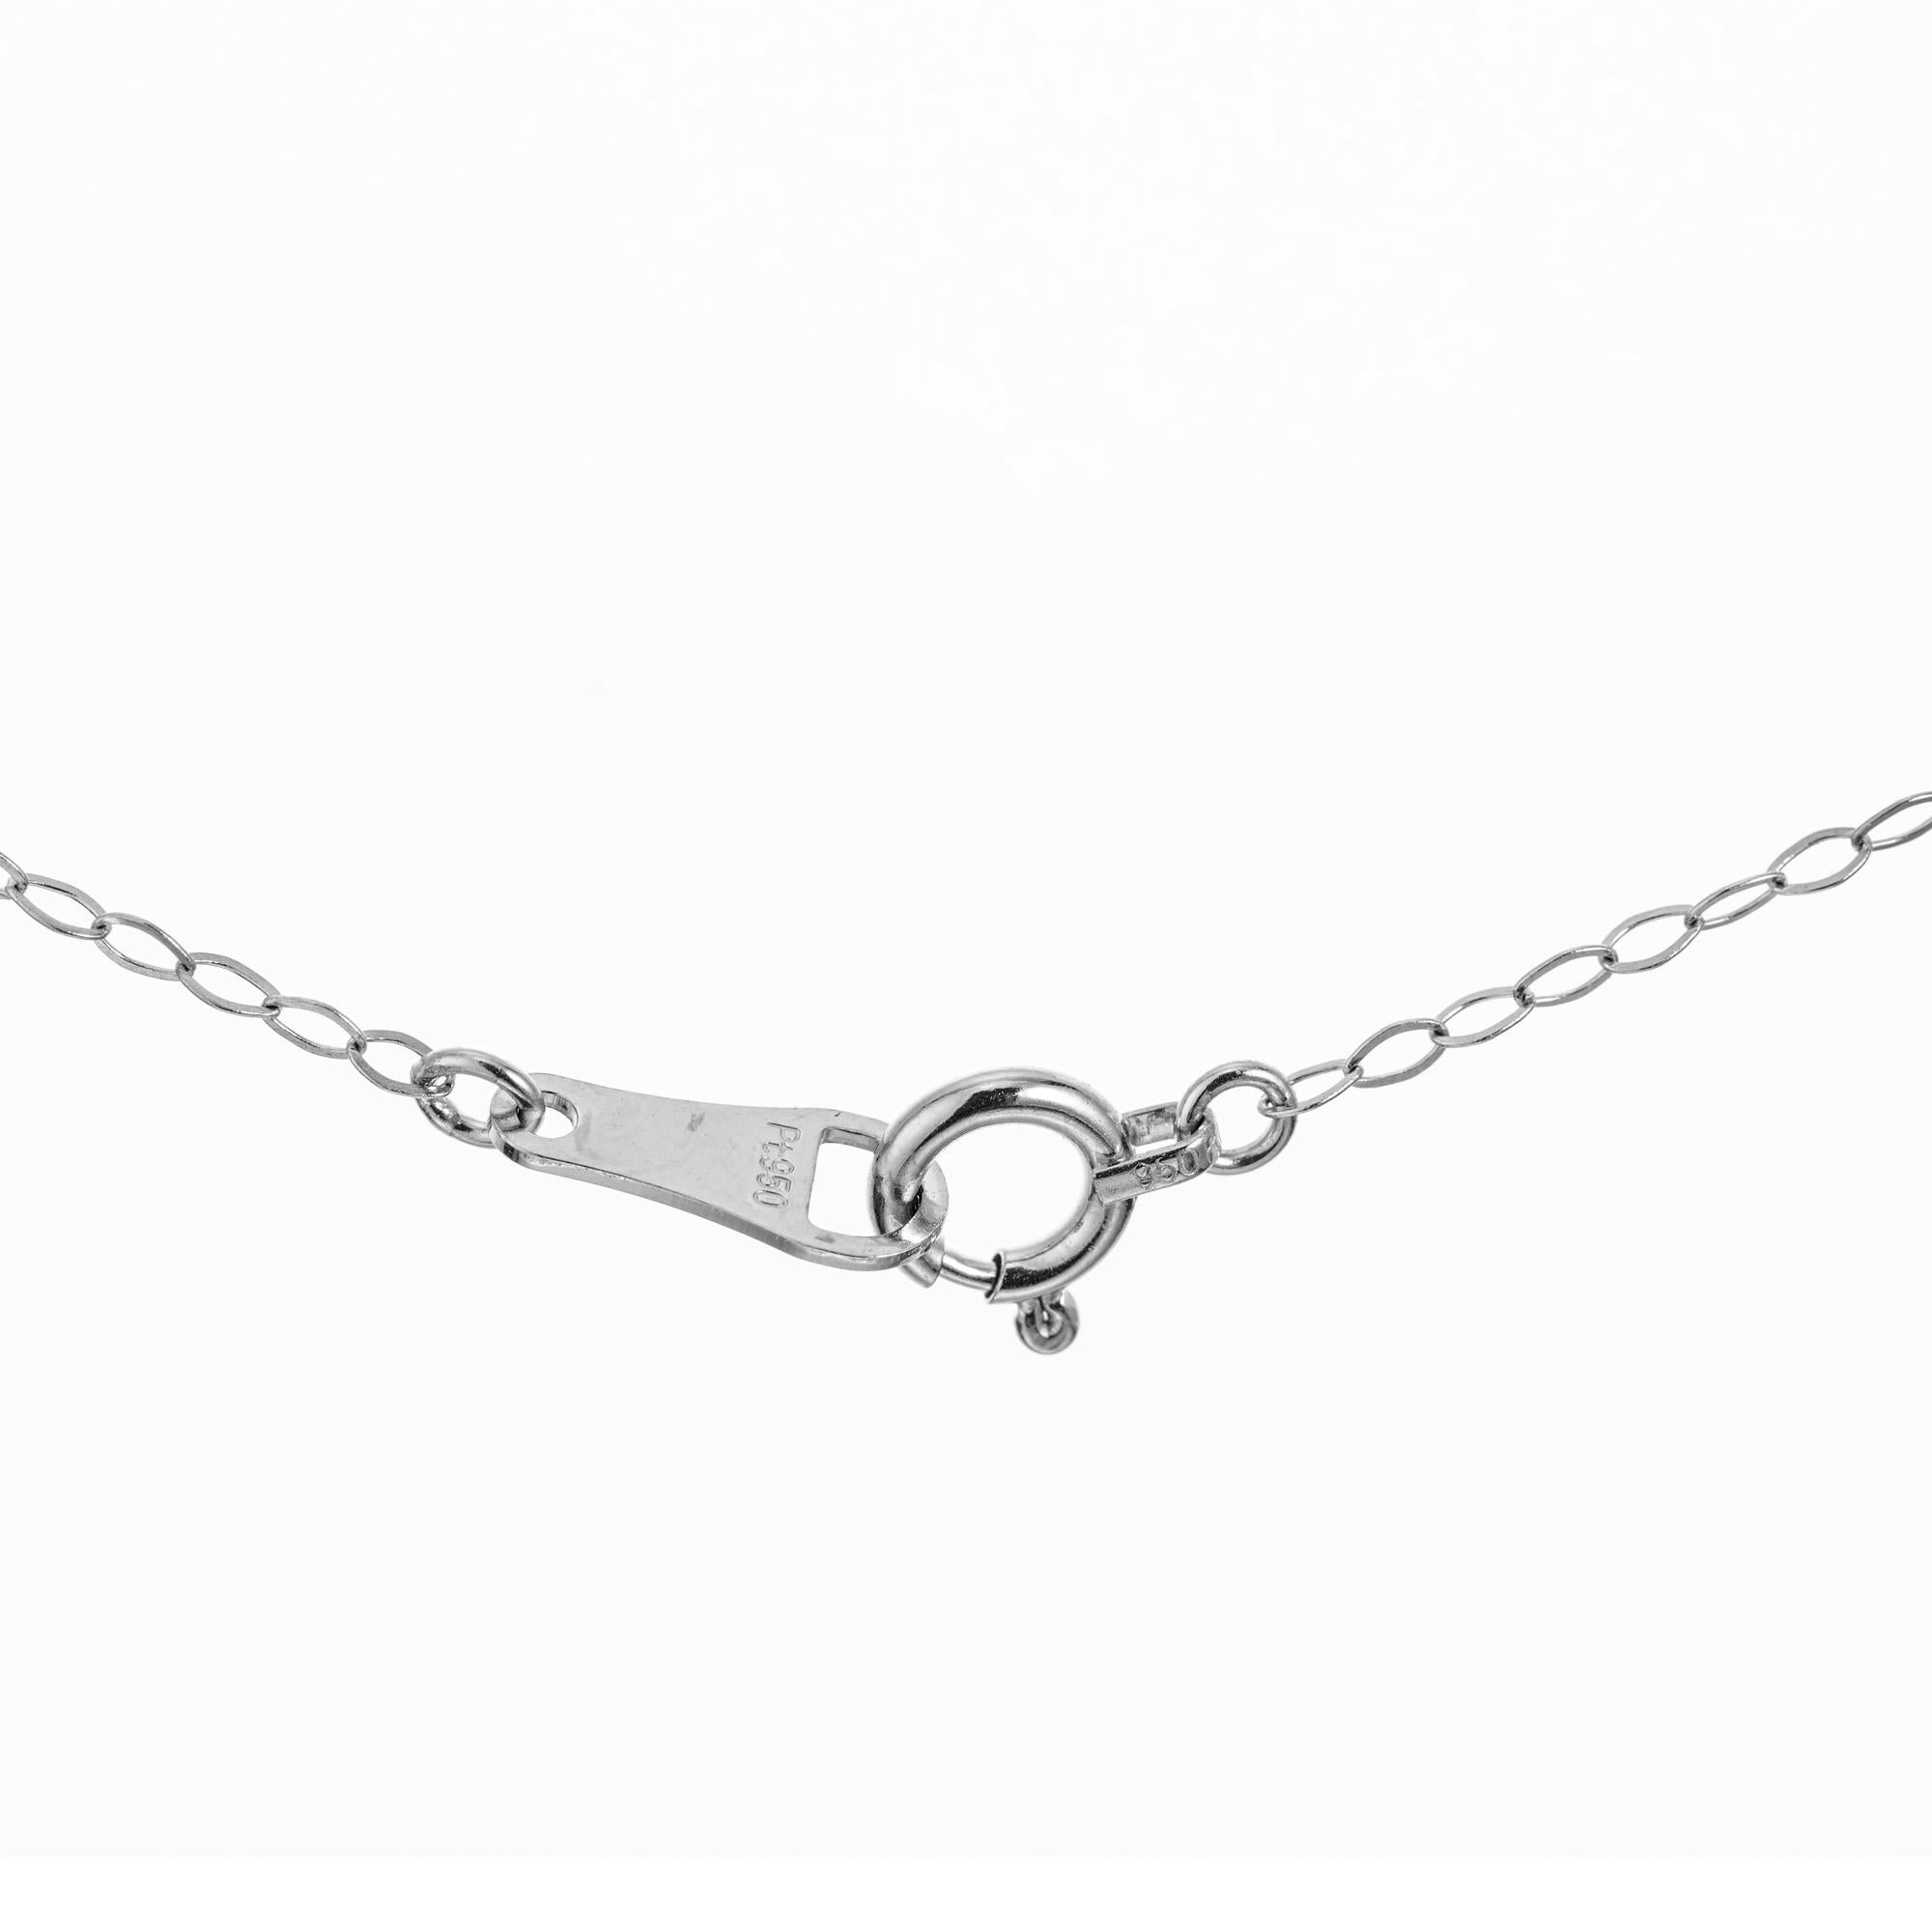 Women's Peter Suchy GIA Certified 1.32 Carat Diamond Platinum Pendant Necklace